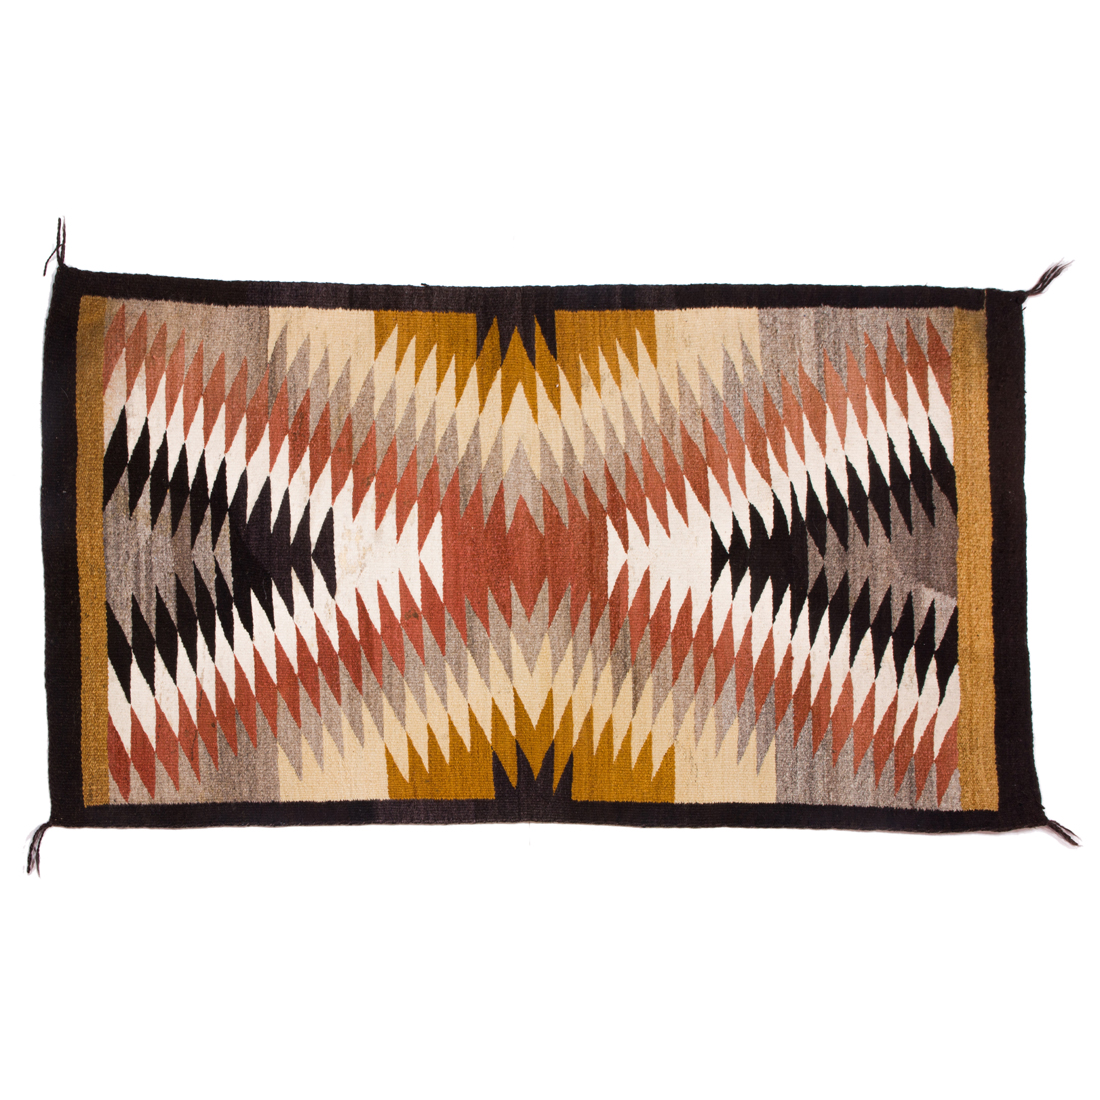 A NAVAJO BLANKET A Navajo blanket, 50